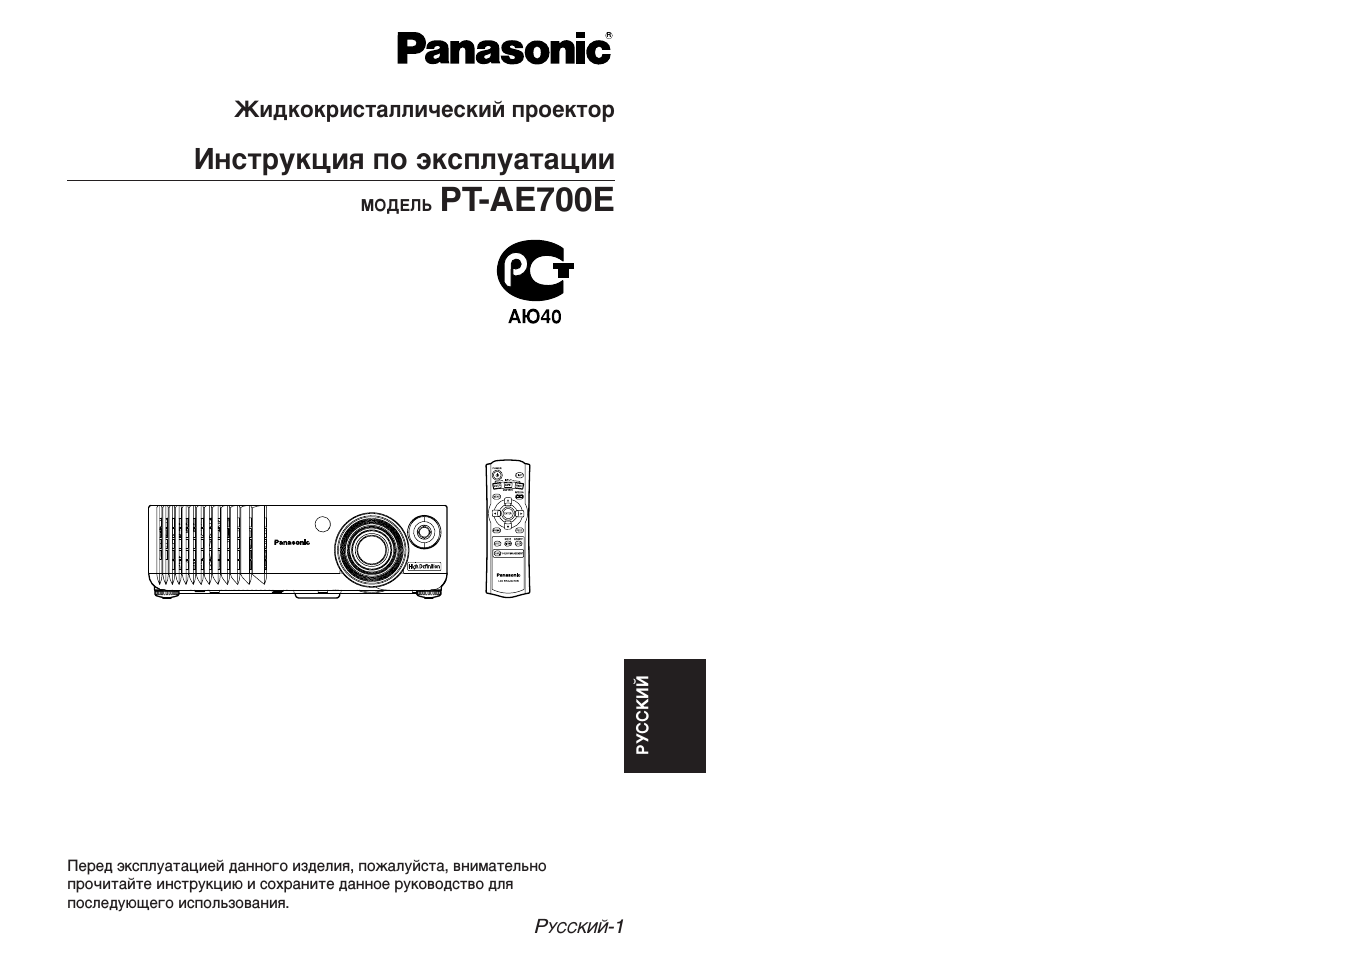 Инструкция по эксплуатации Panasonic PT-AE700E | 31 cтраница